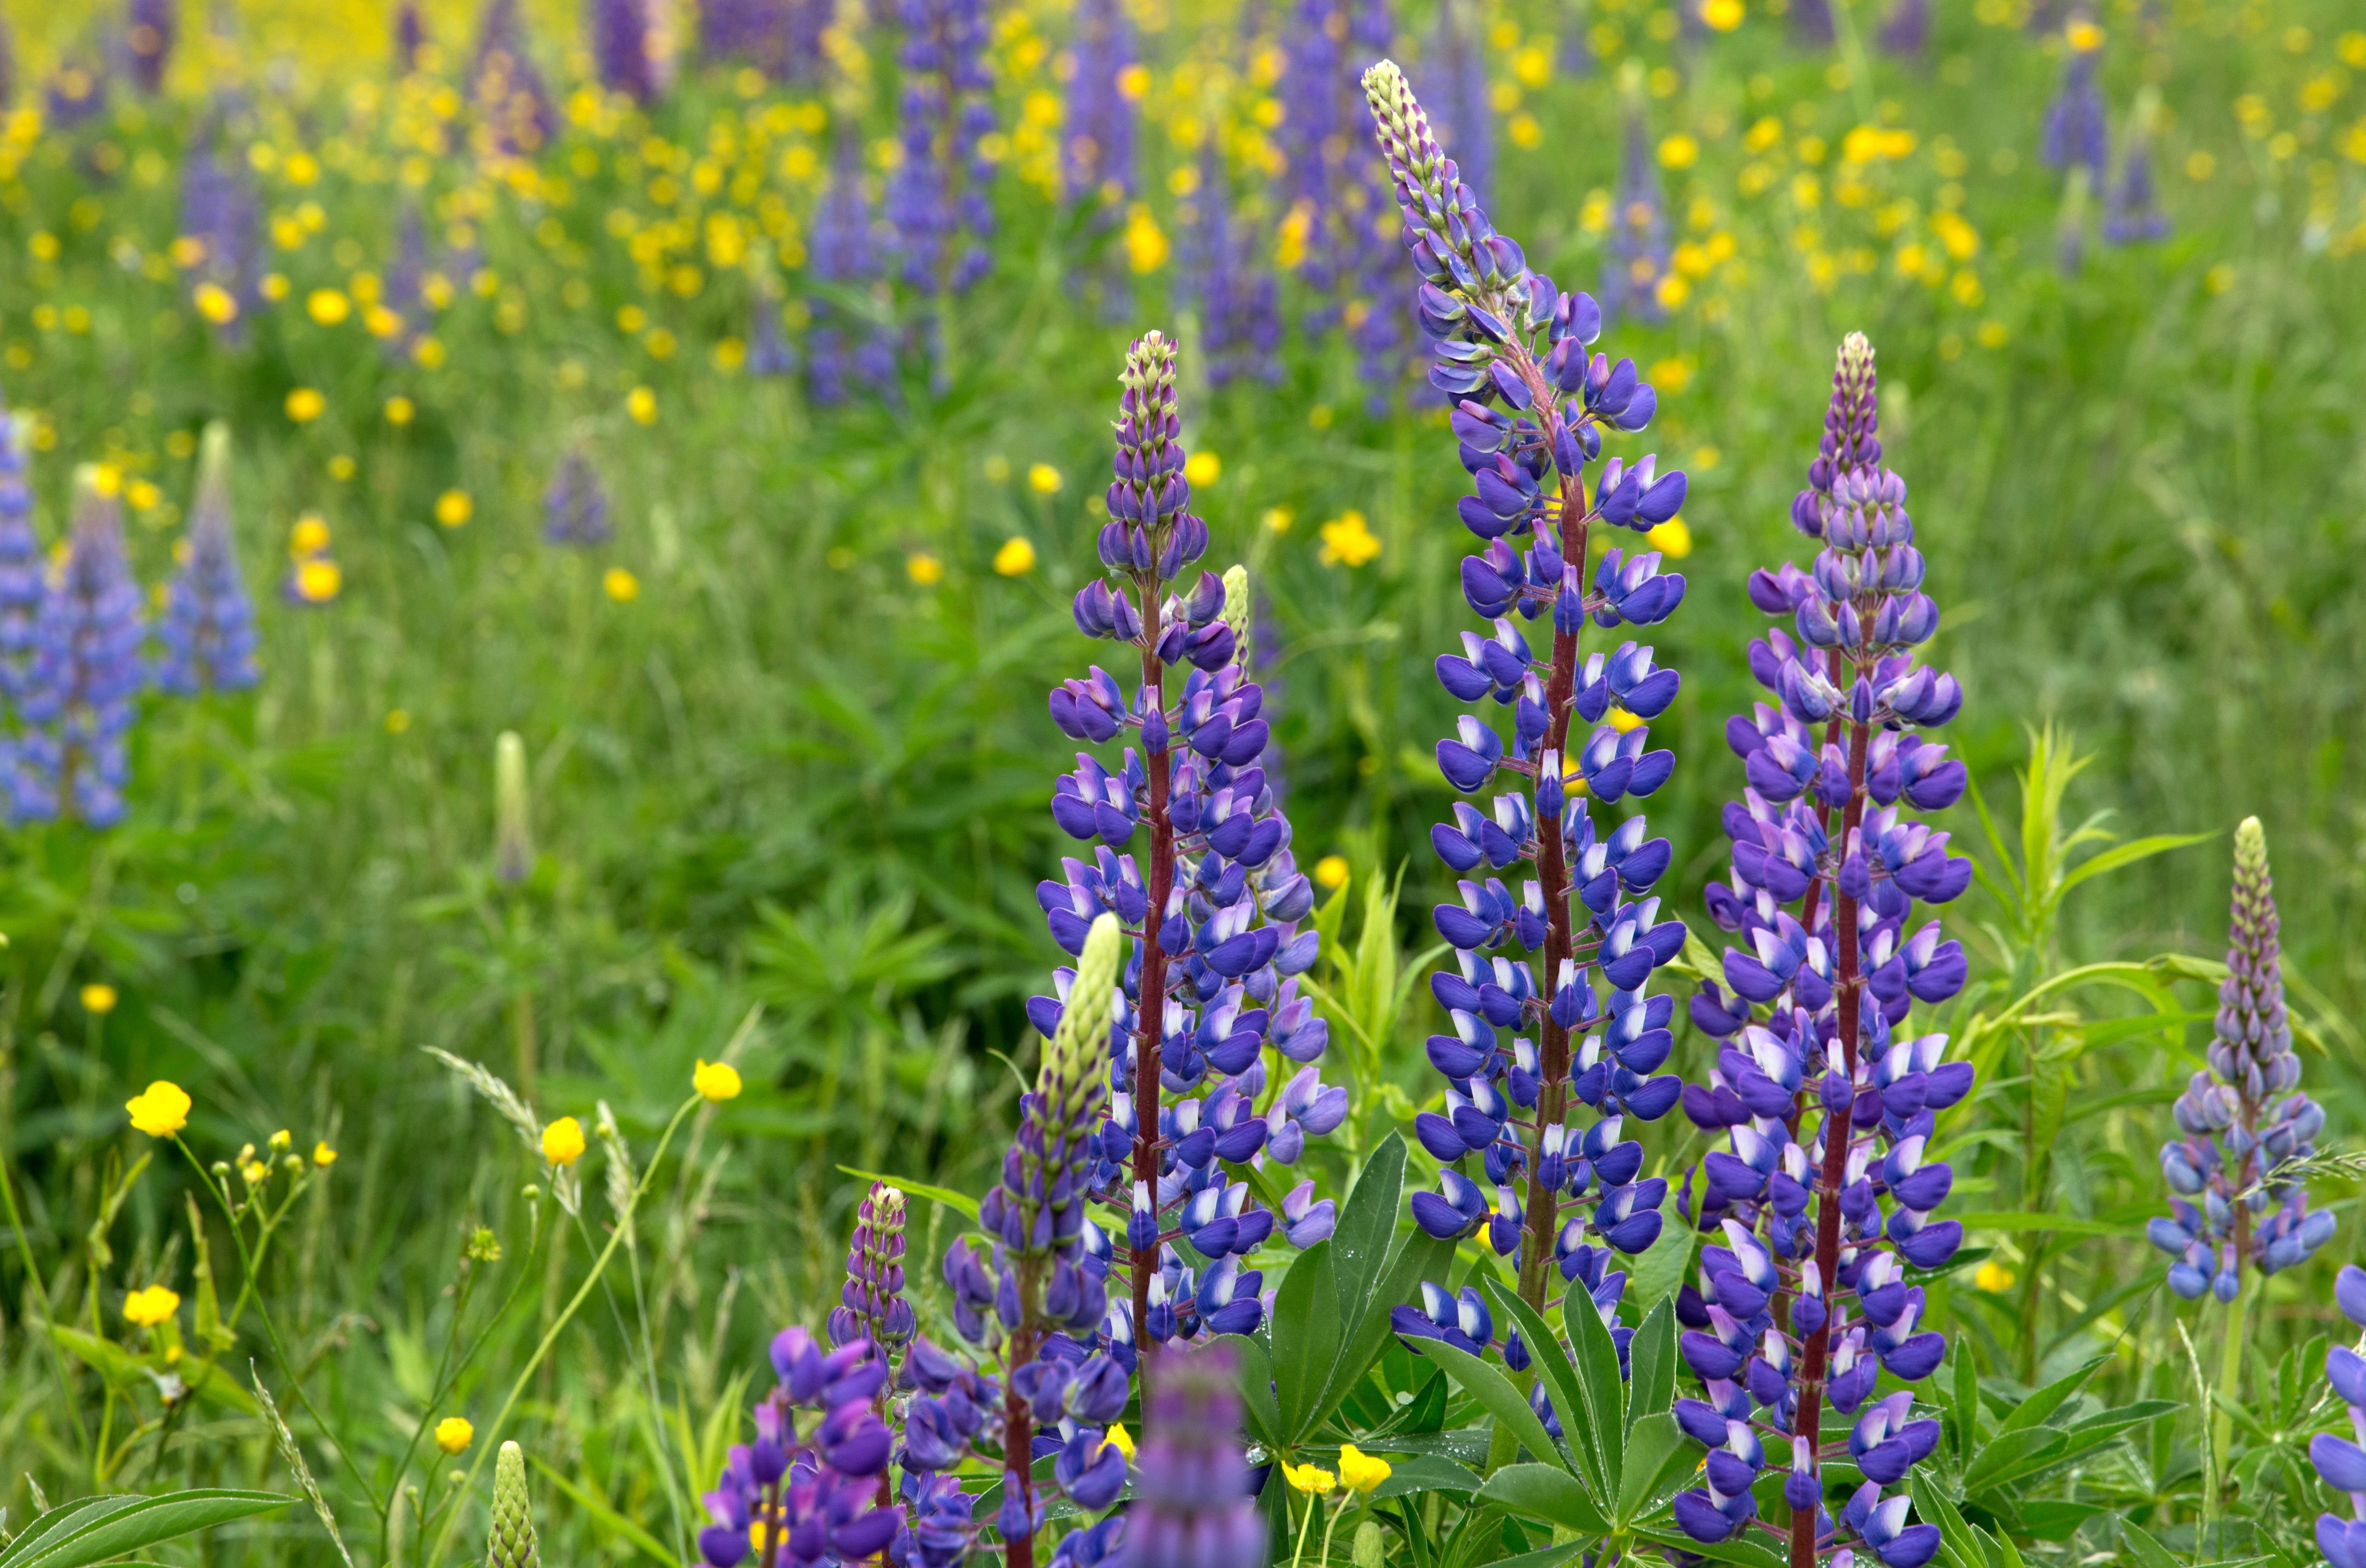 Free picture: purple wild flowers, wild lupine flowers, tall grass